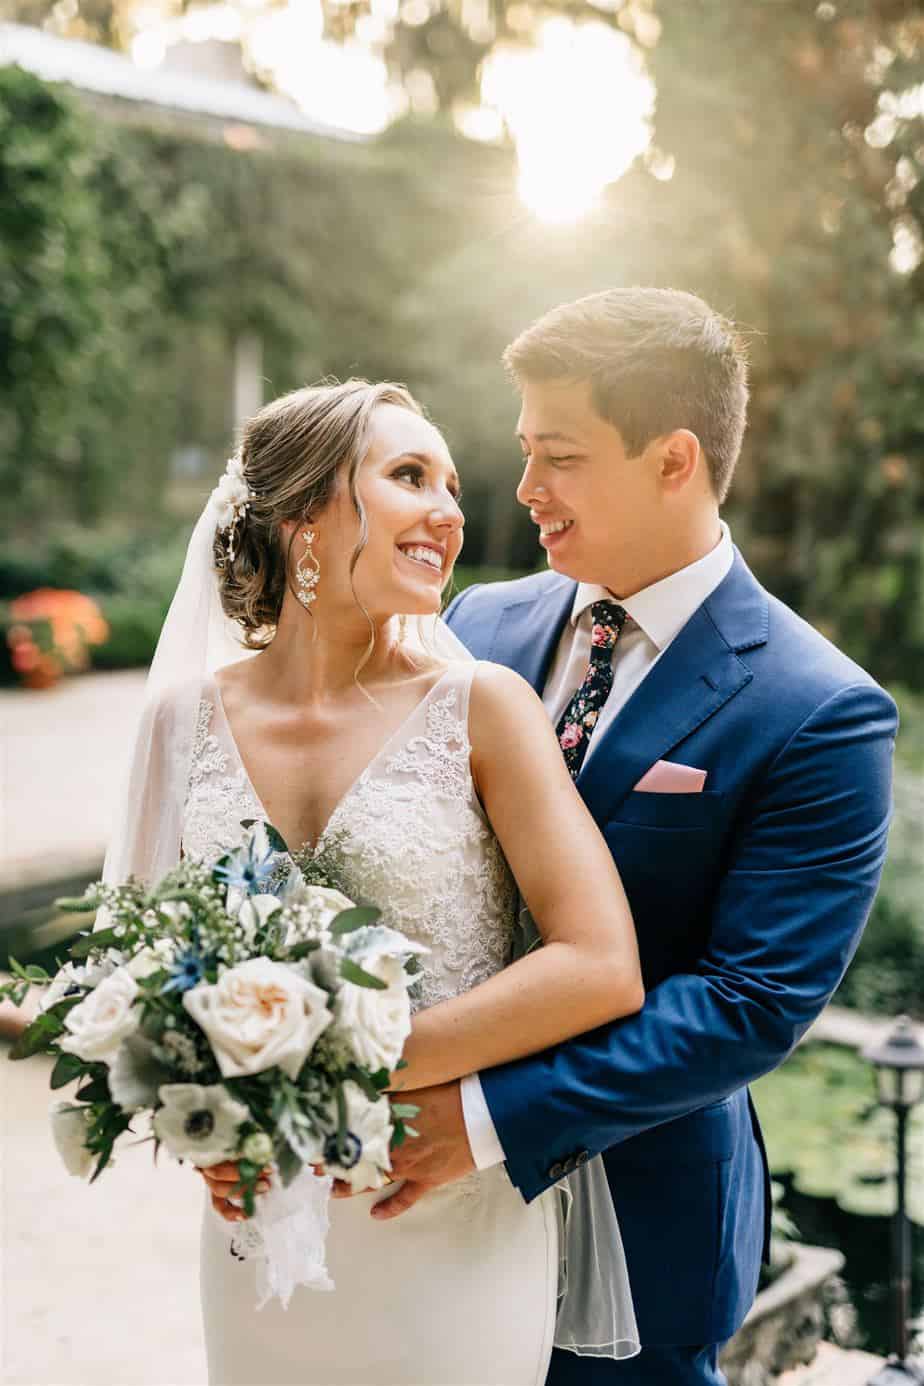 Grant + Danielle Woodruff Wedding October 27th 2019 - Borglum.com ...